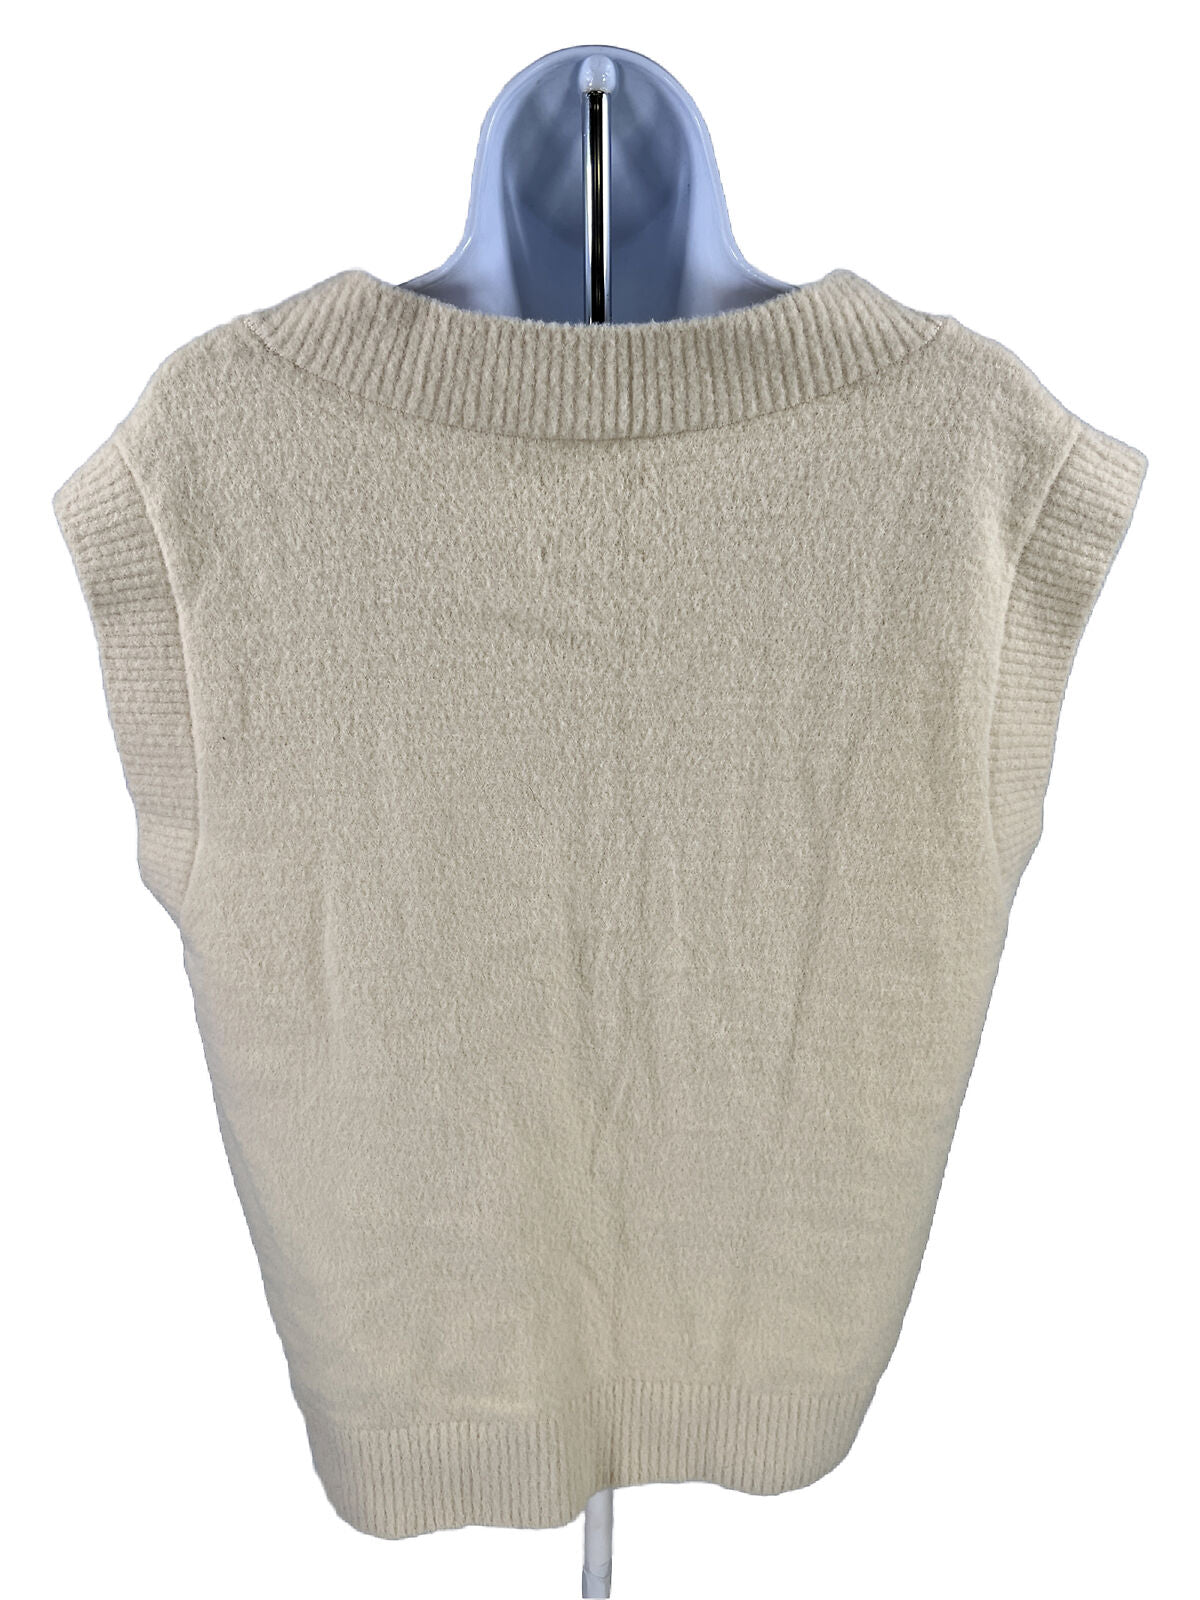 NUEVO Suéter sin mangas de la colección Ivory Soft de Abercrombie para mujer - L